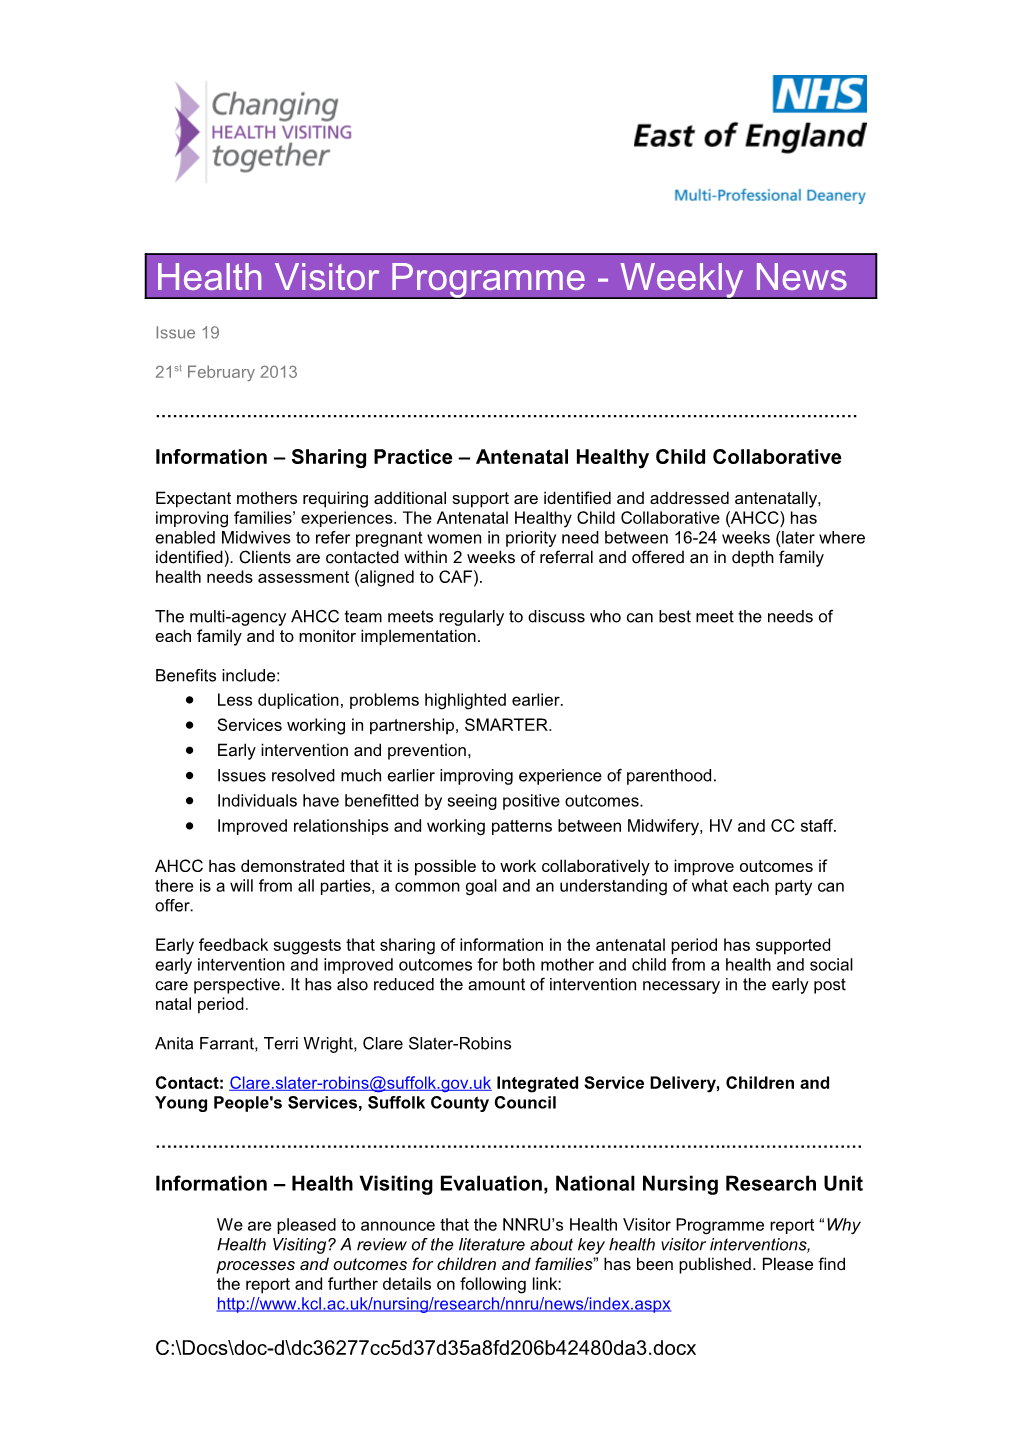 Information Sharing Practice Antenatal Healthy Child Collaborative